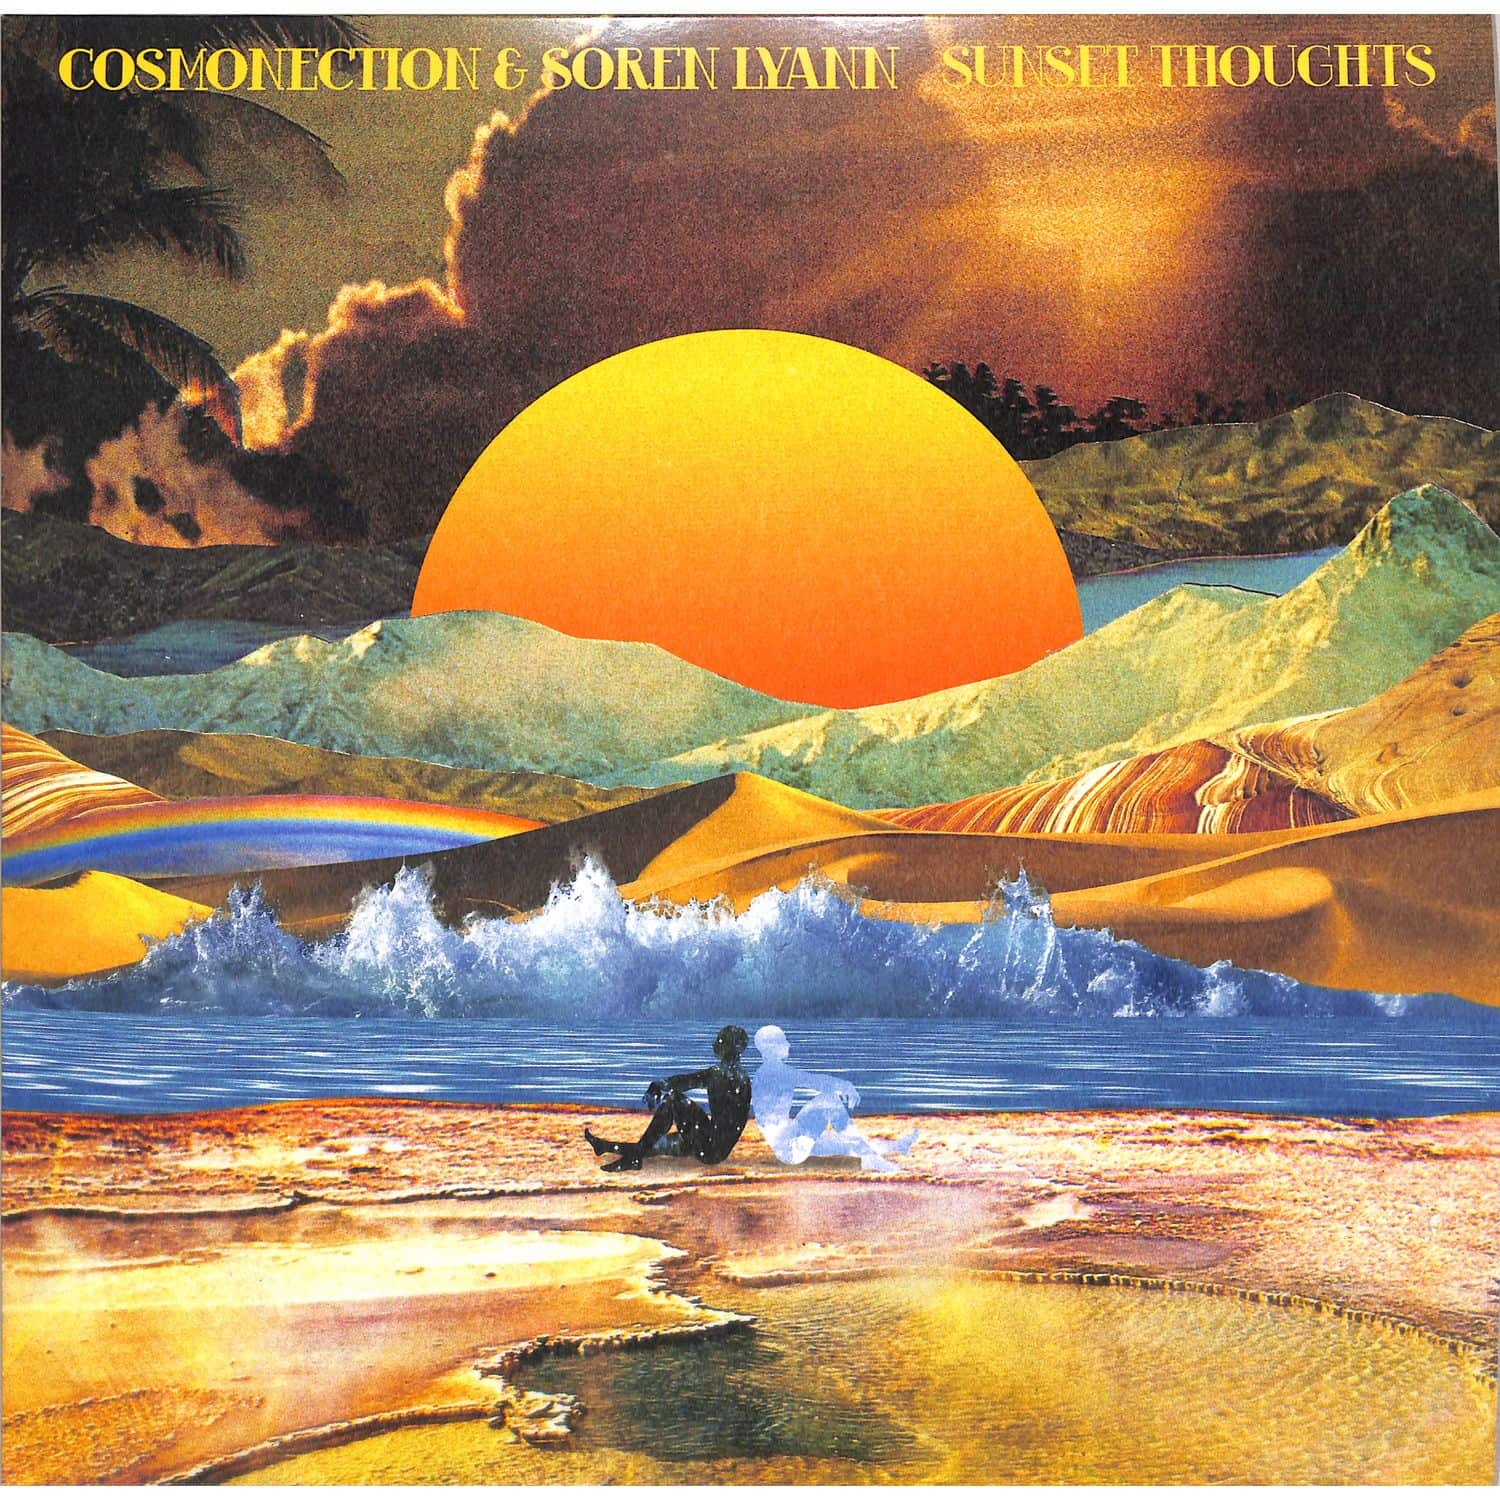 Cosmonection, Soren Lyann - SUNSET THOUGHTS